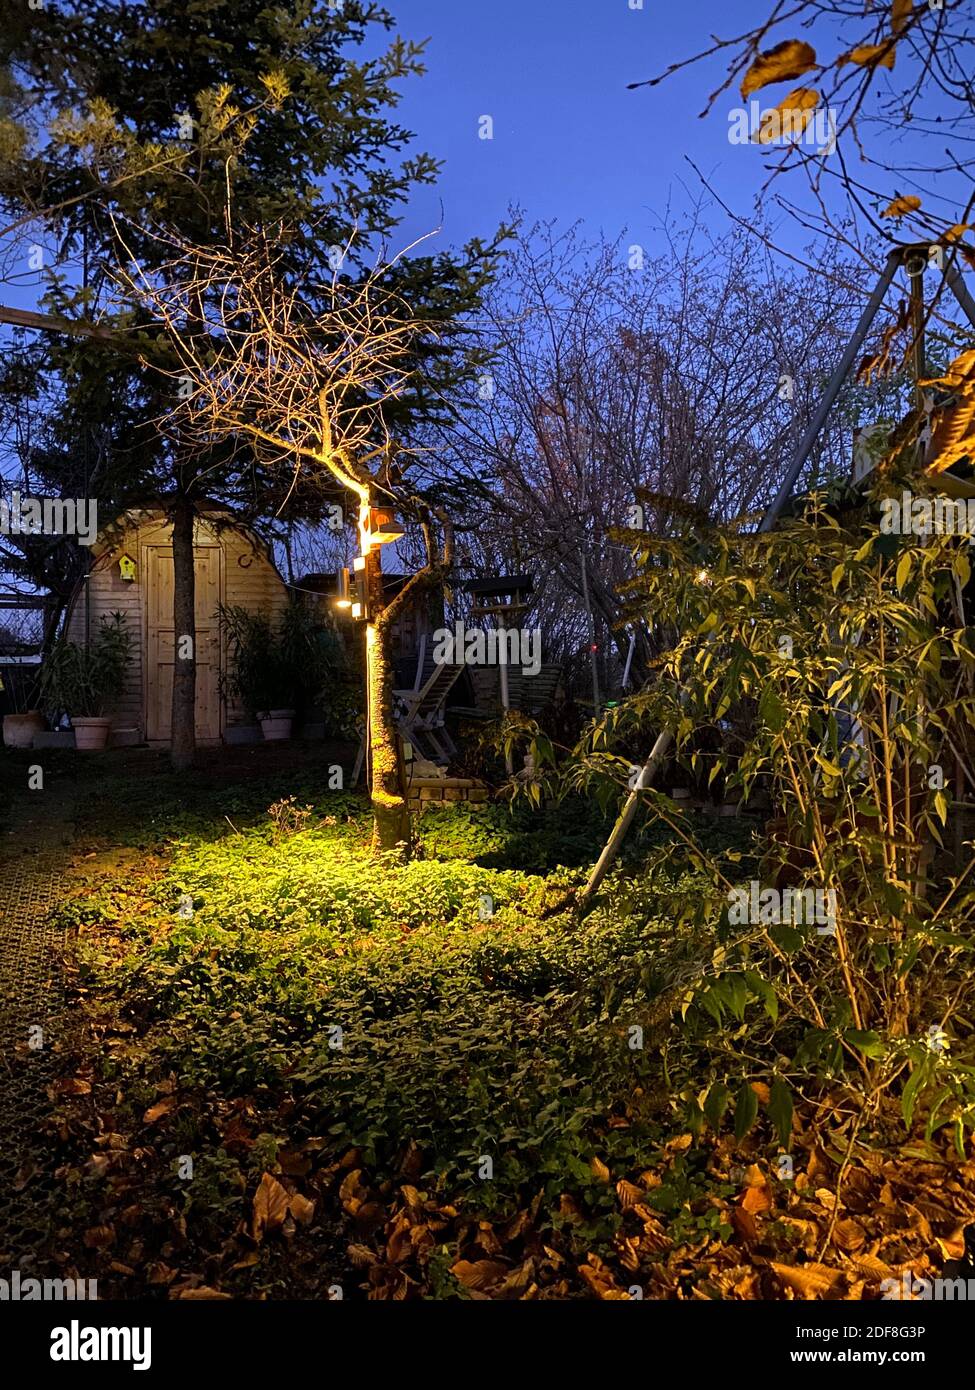 Romantic Garden With Night Lighting Stock Photo